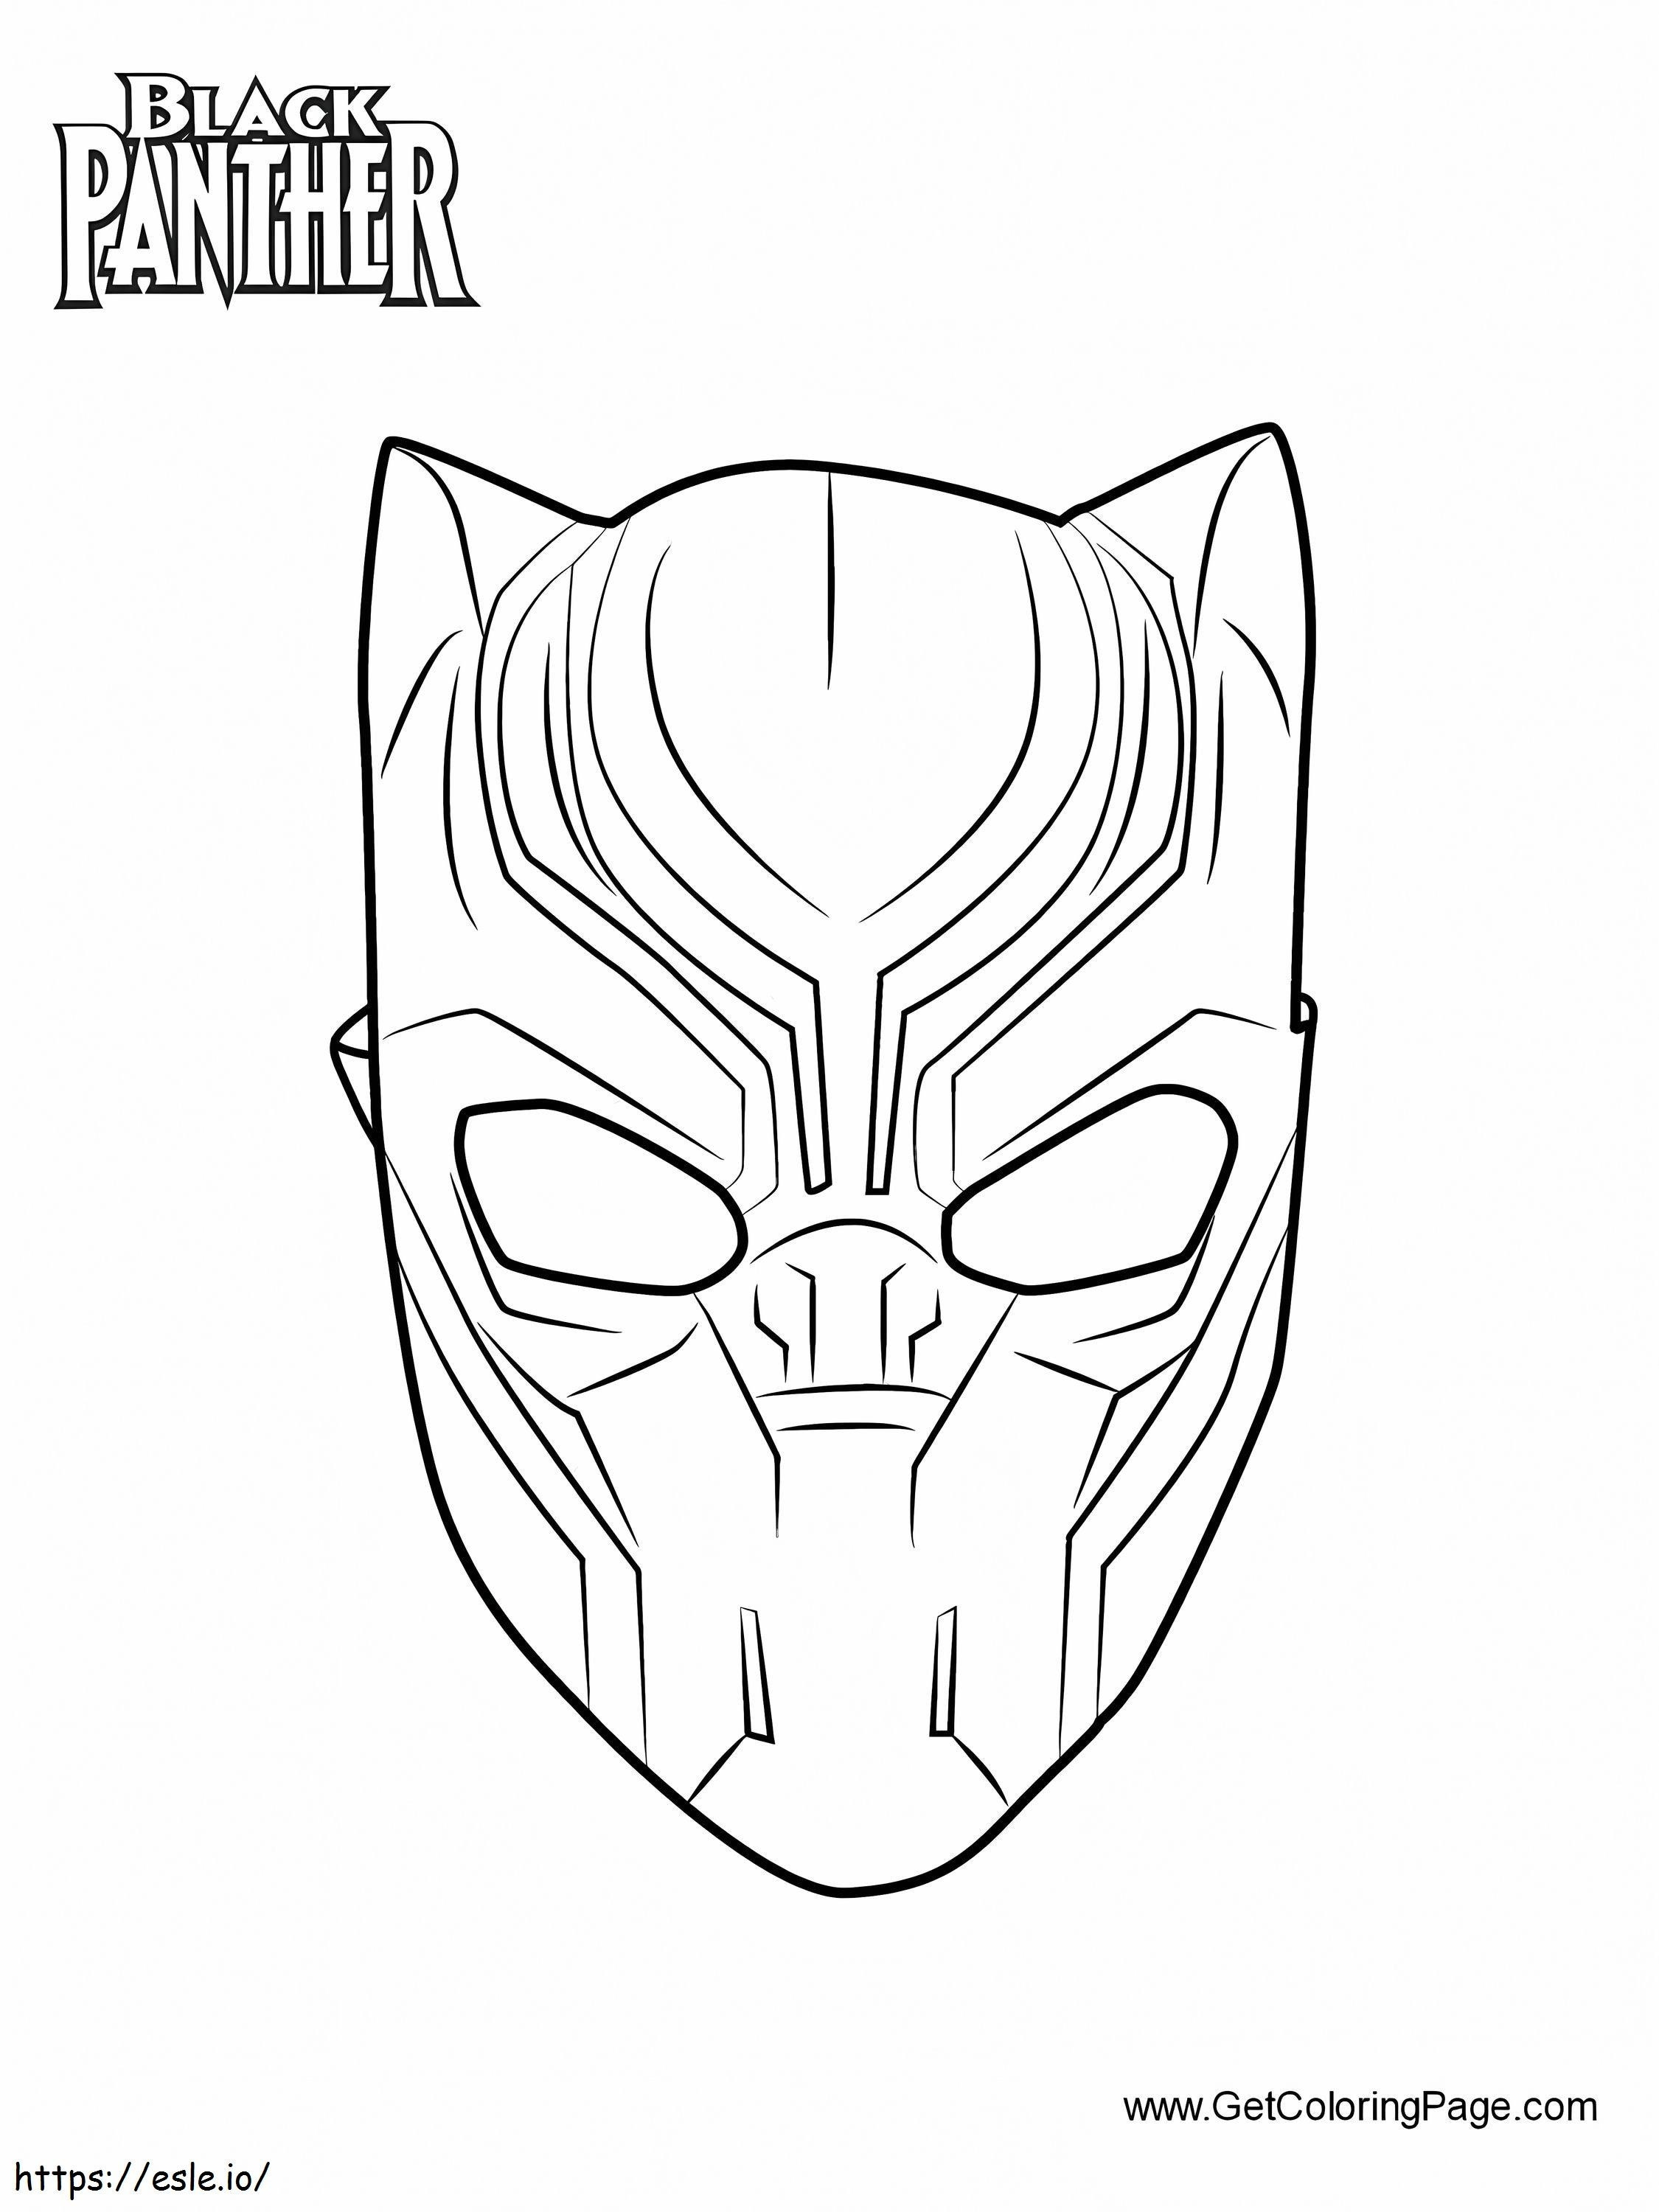 1539414888 Masker Black Panther Dapat Dicetak Gambar Mewarnai